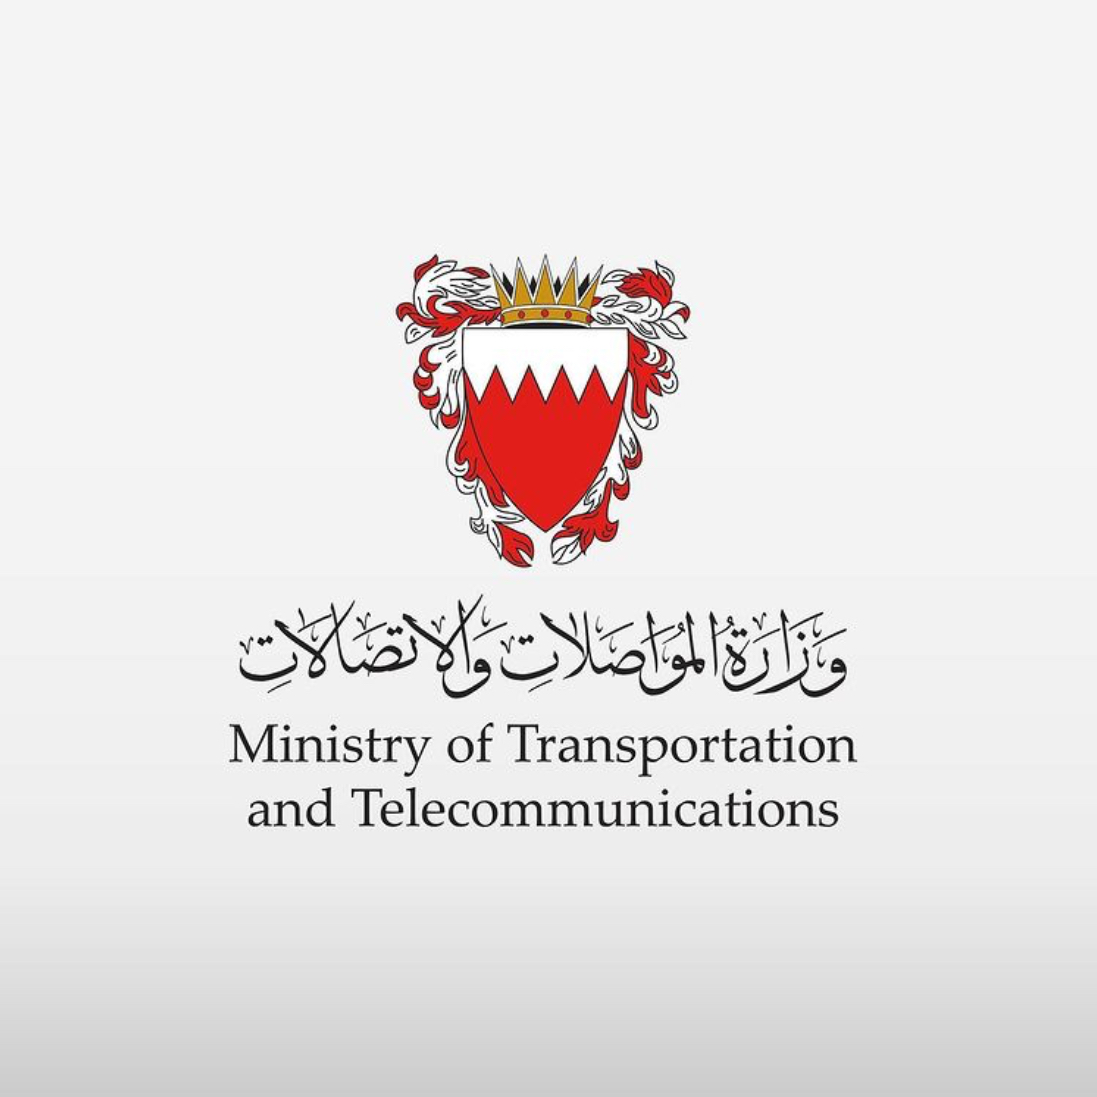 Bahrain travel entry procedures update: 28 October 2021